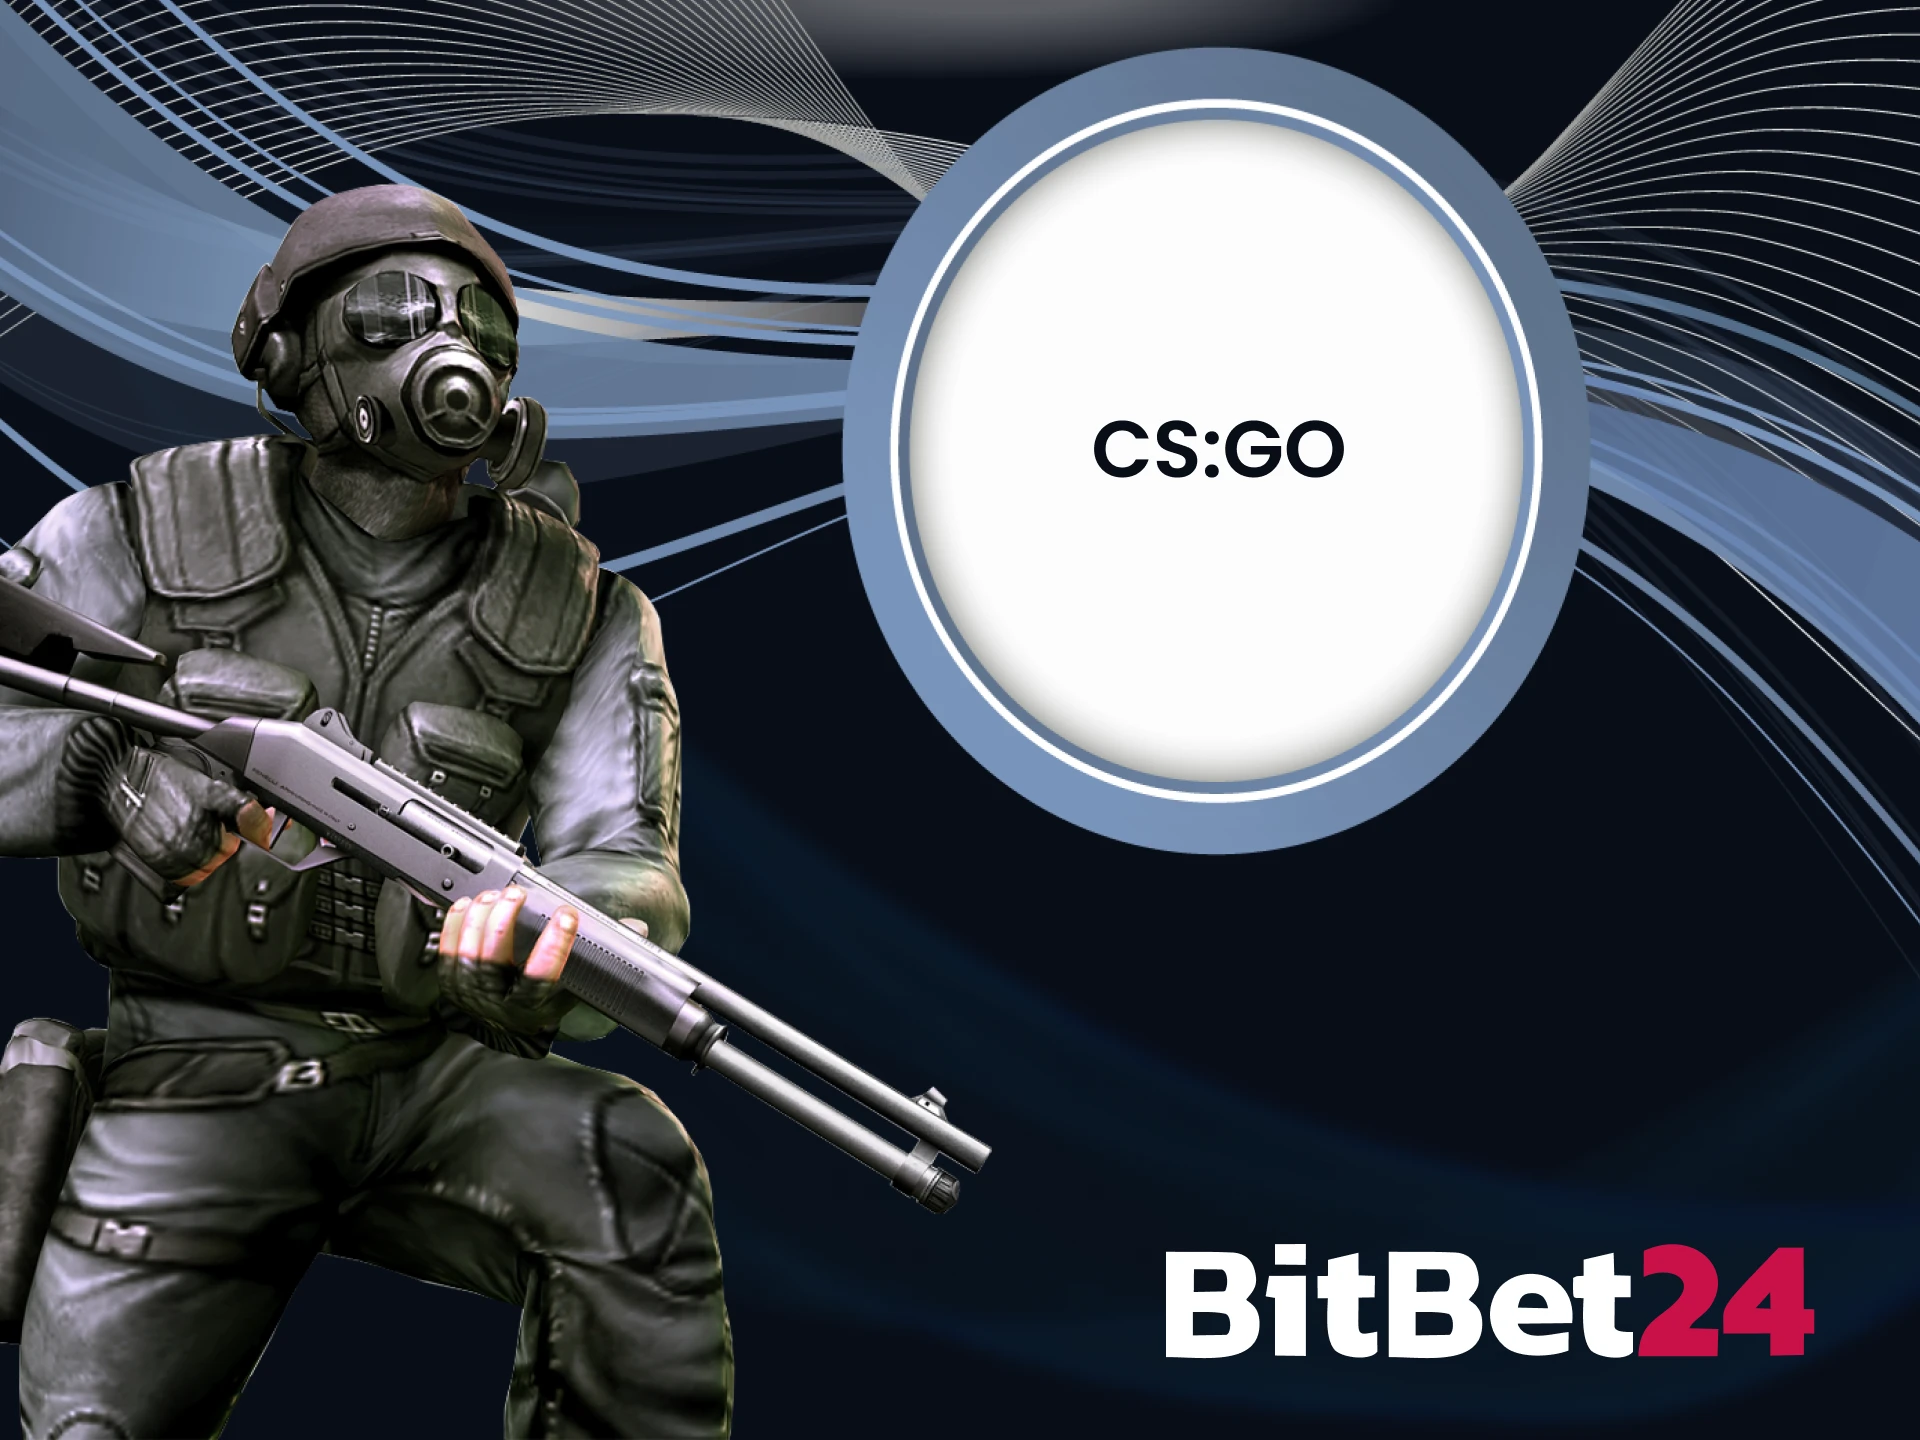 Bet on CS:GO with BitBet24.